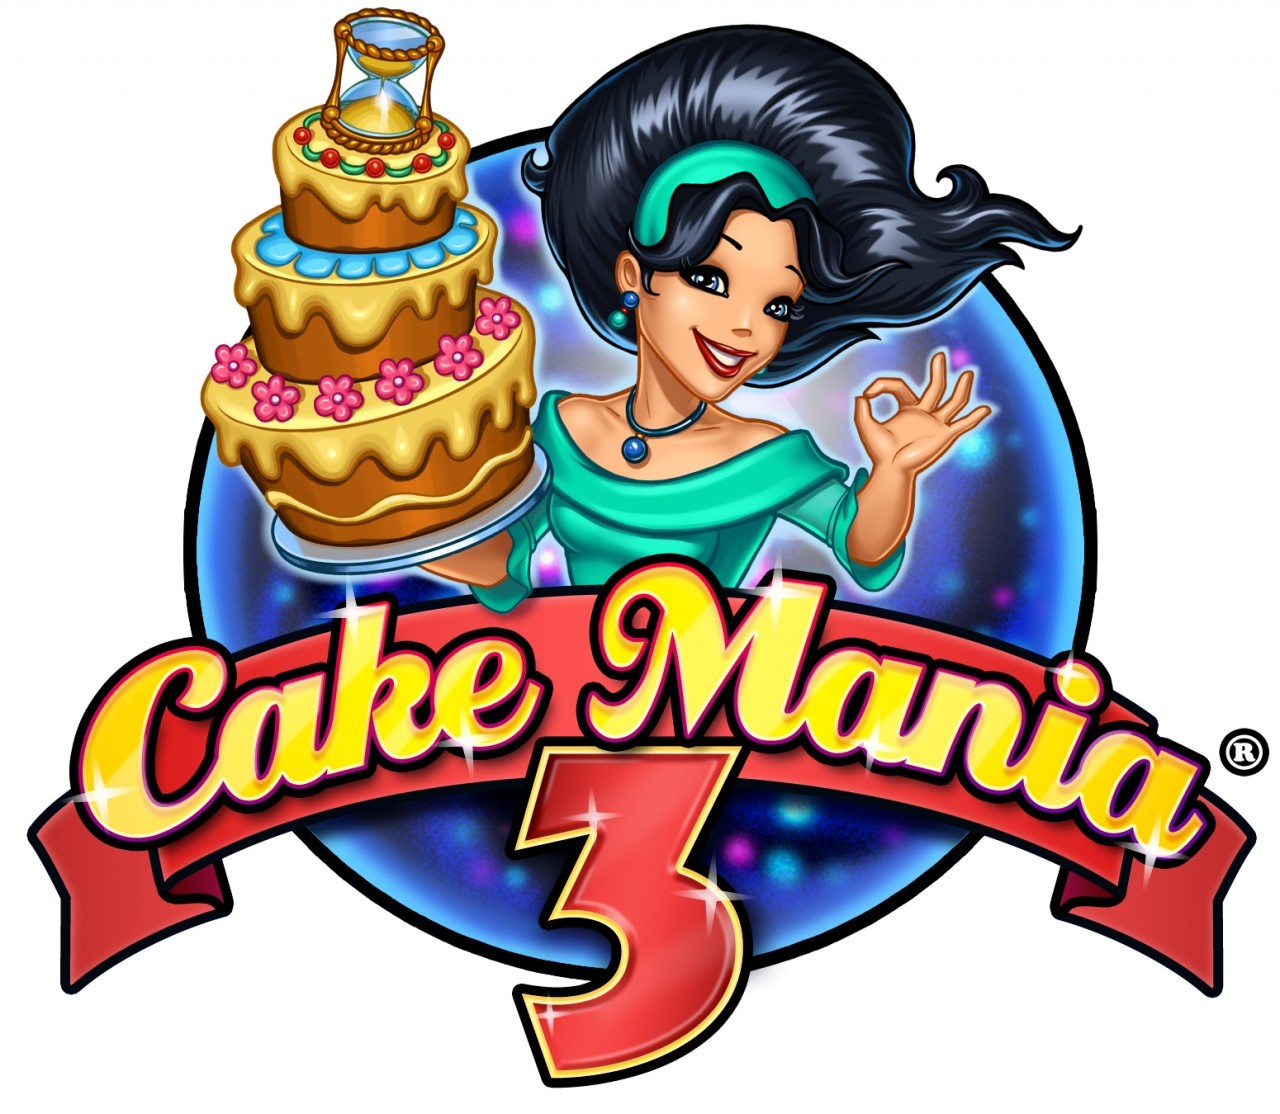 game cake mania 3